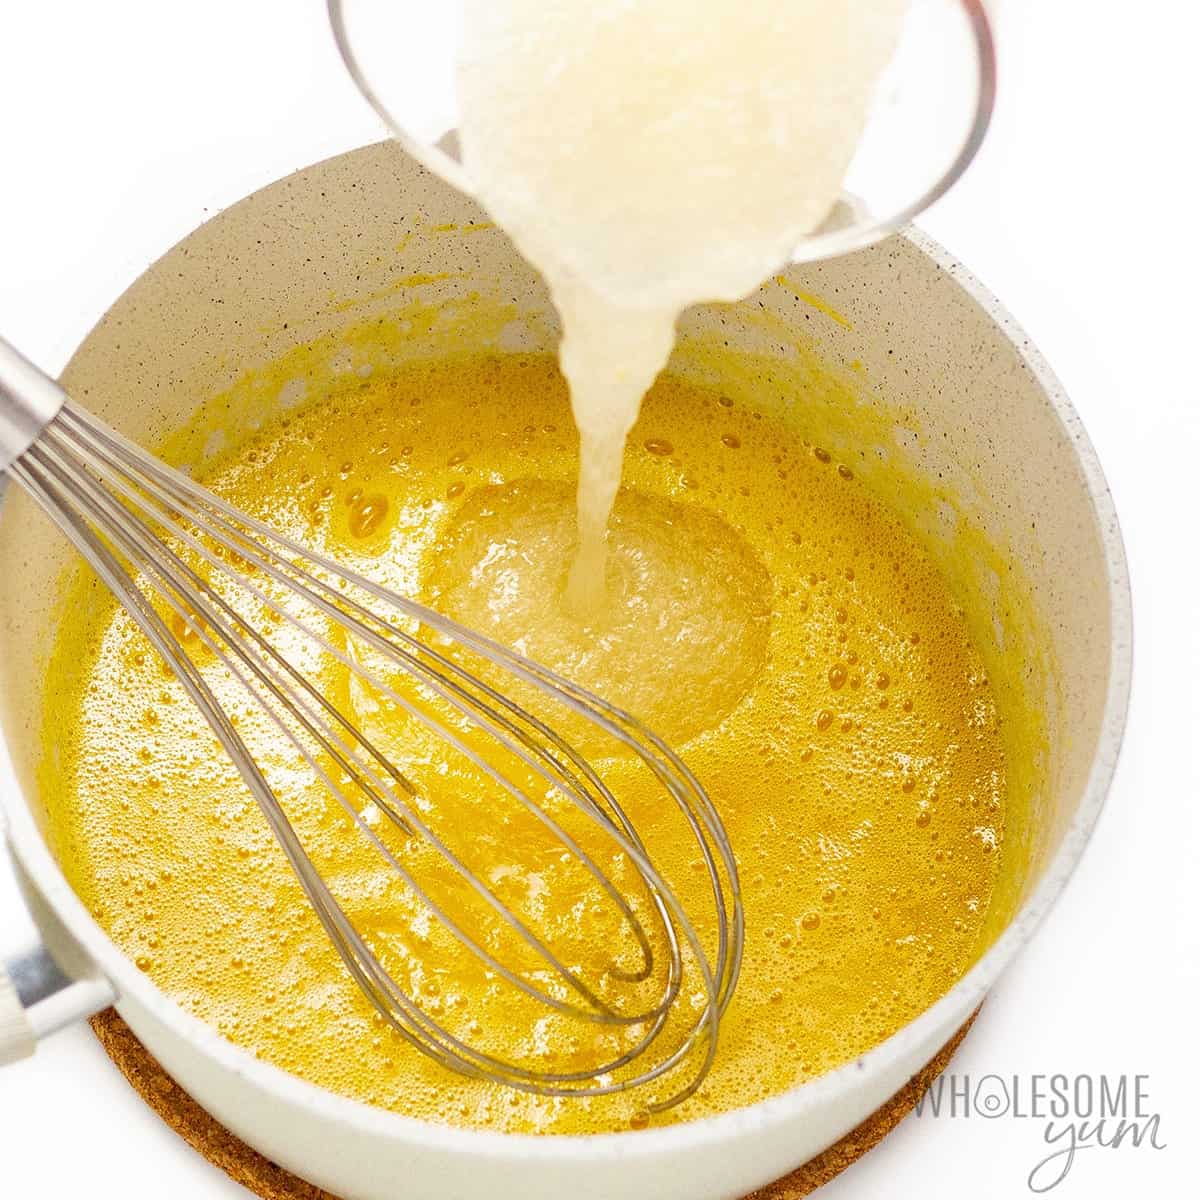 Pour the gelatin mixture into the lemon juice mixture in the saucepan.